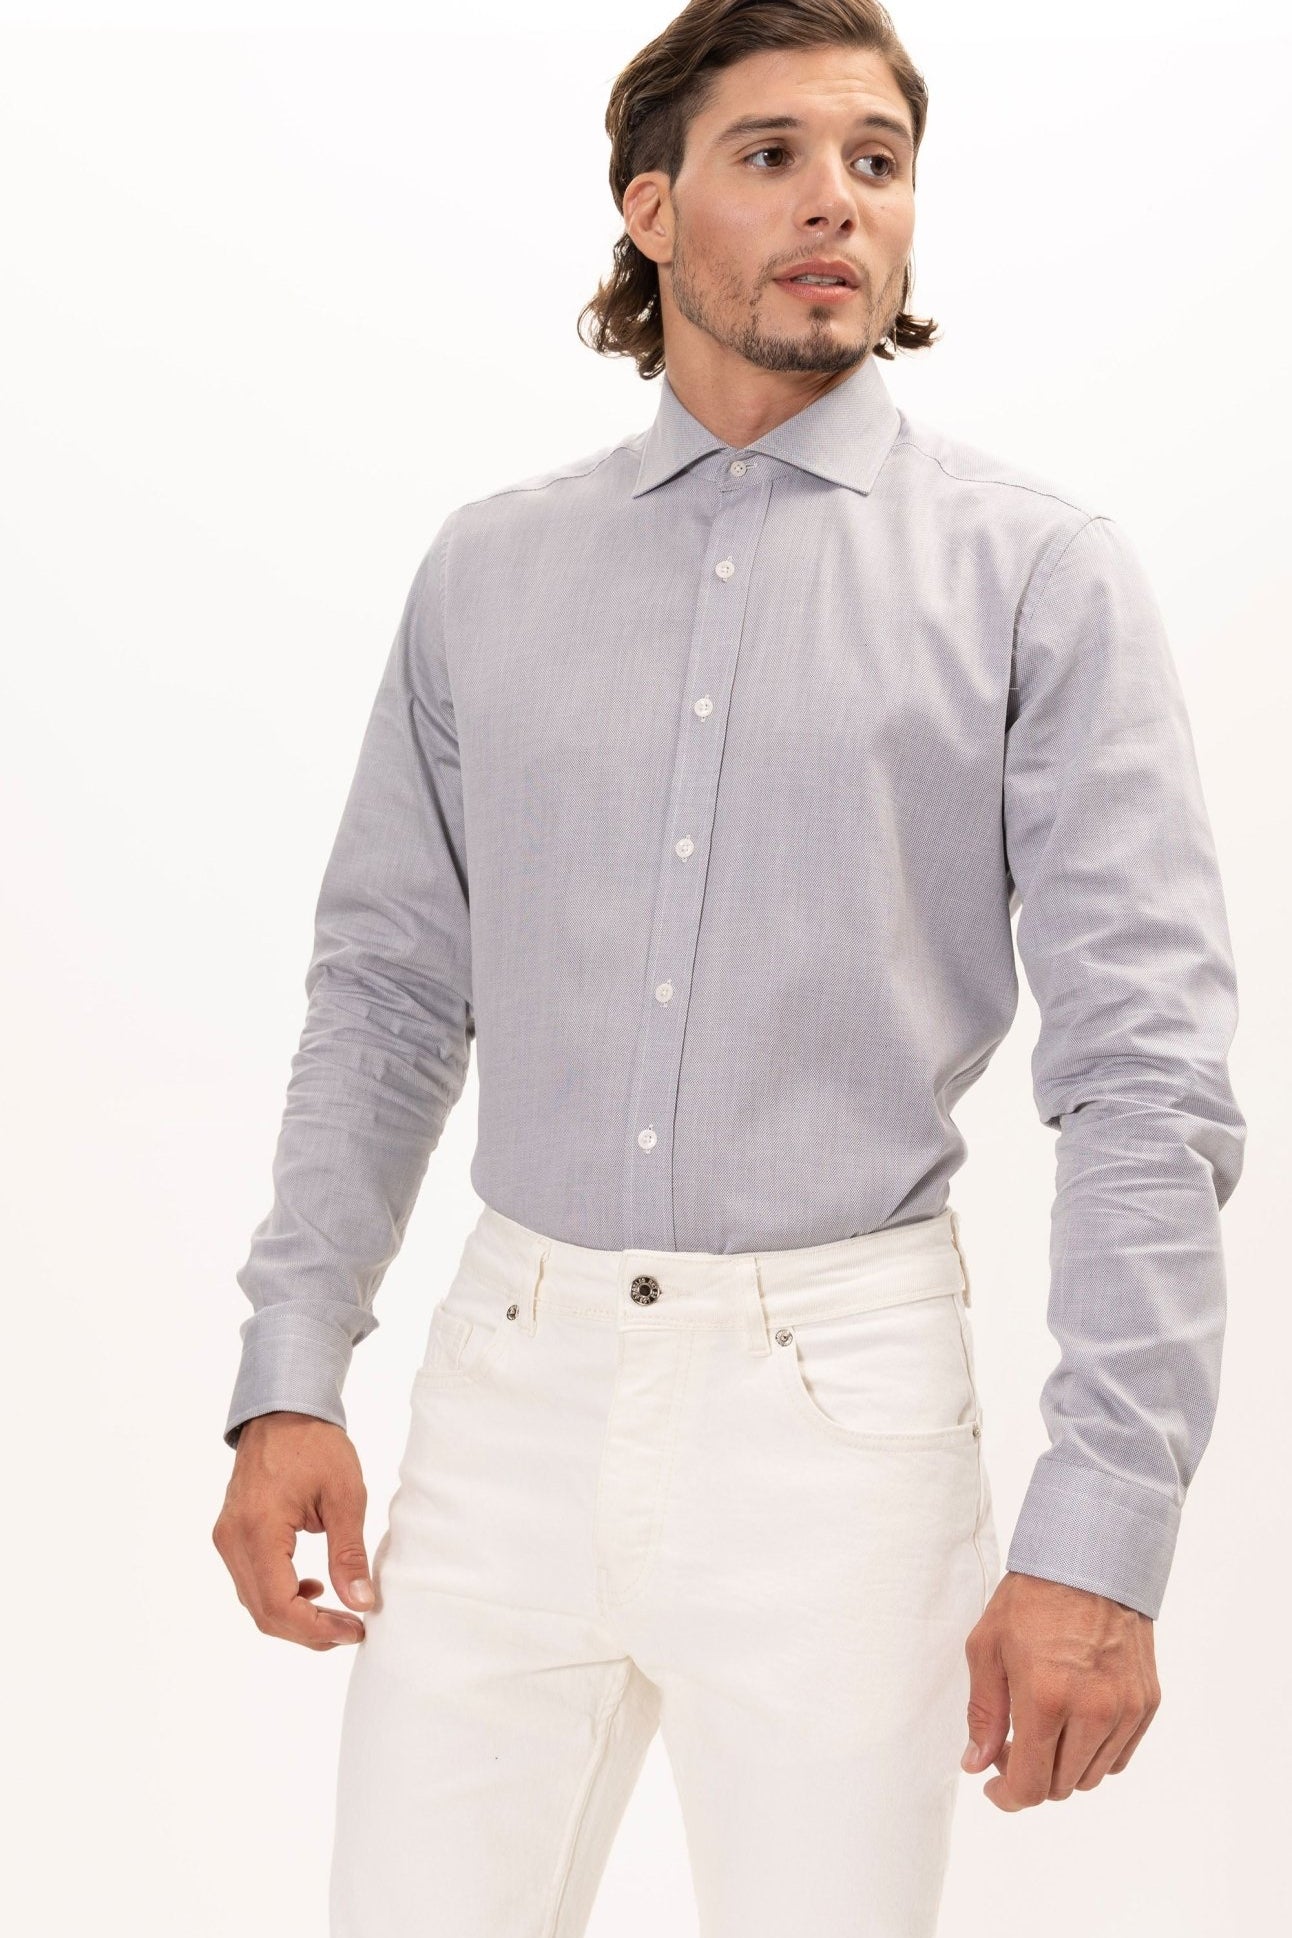 Convertible Cuff Oxford Cotton Spread Collar Dress Shirt - Grey - Ron Tomson